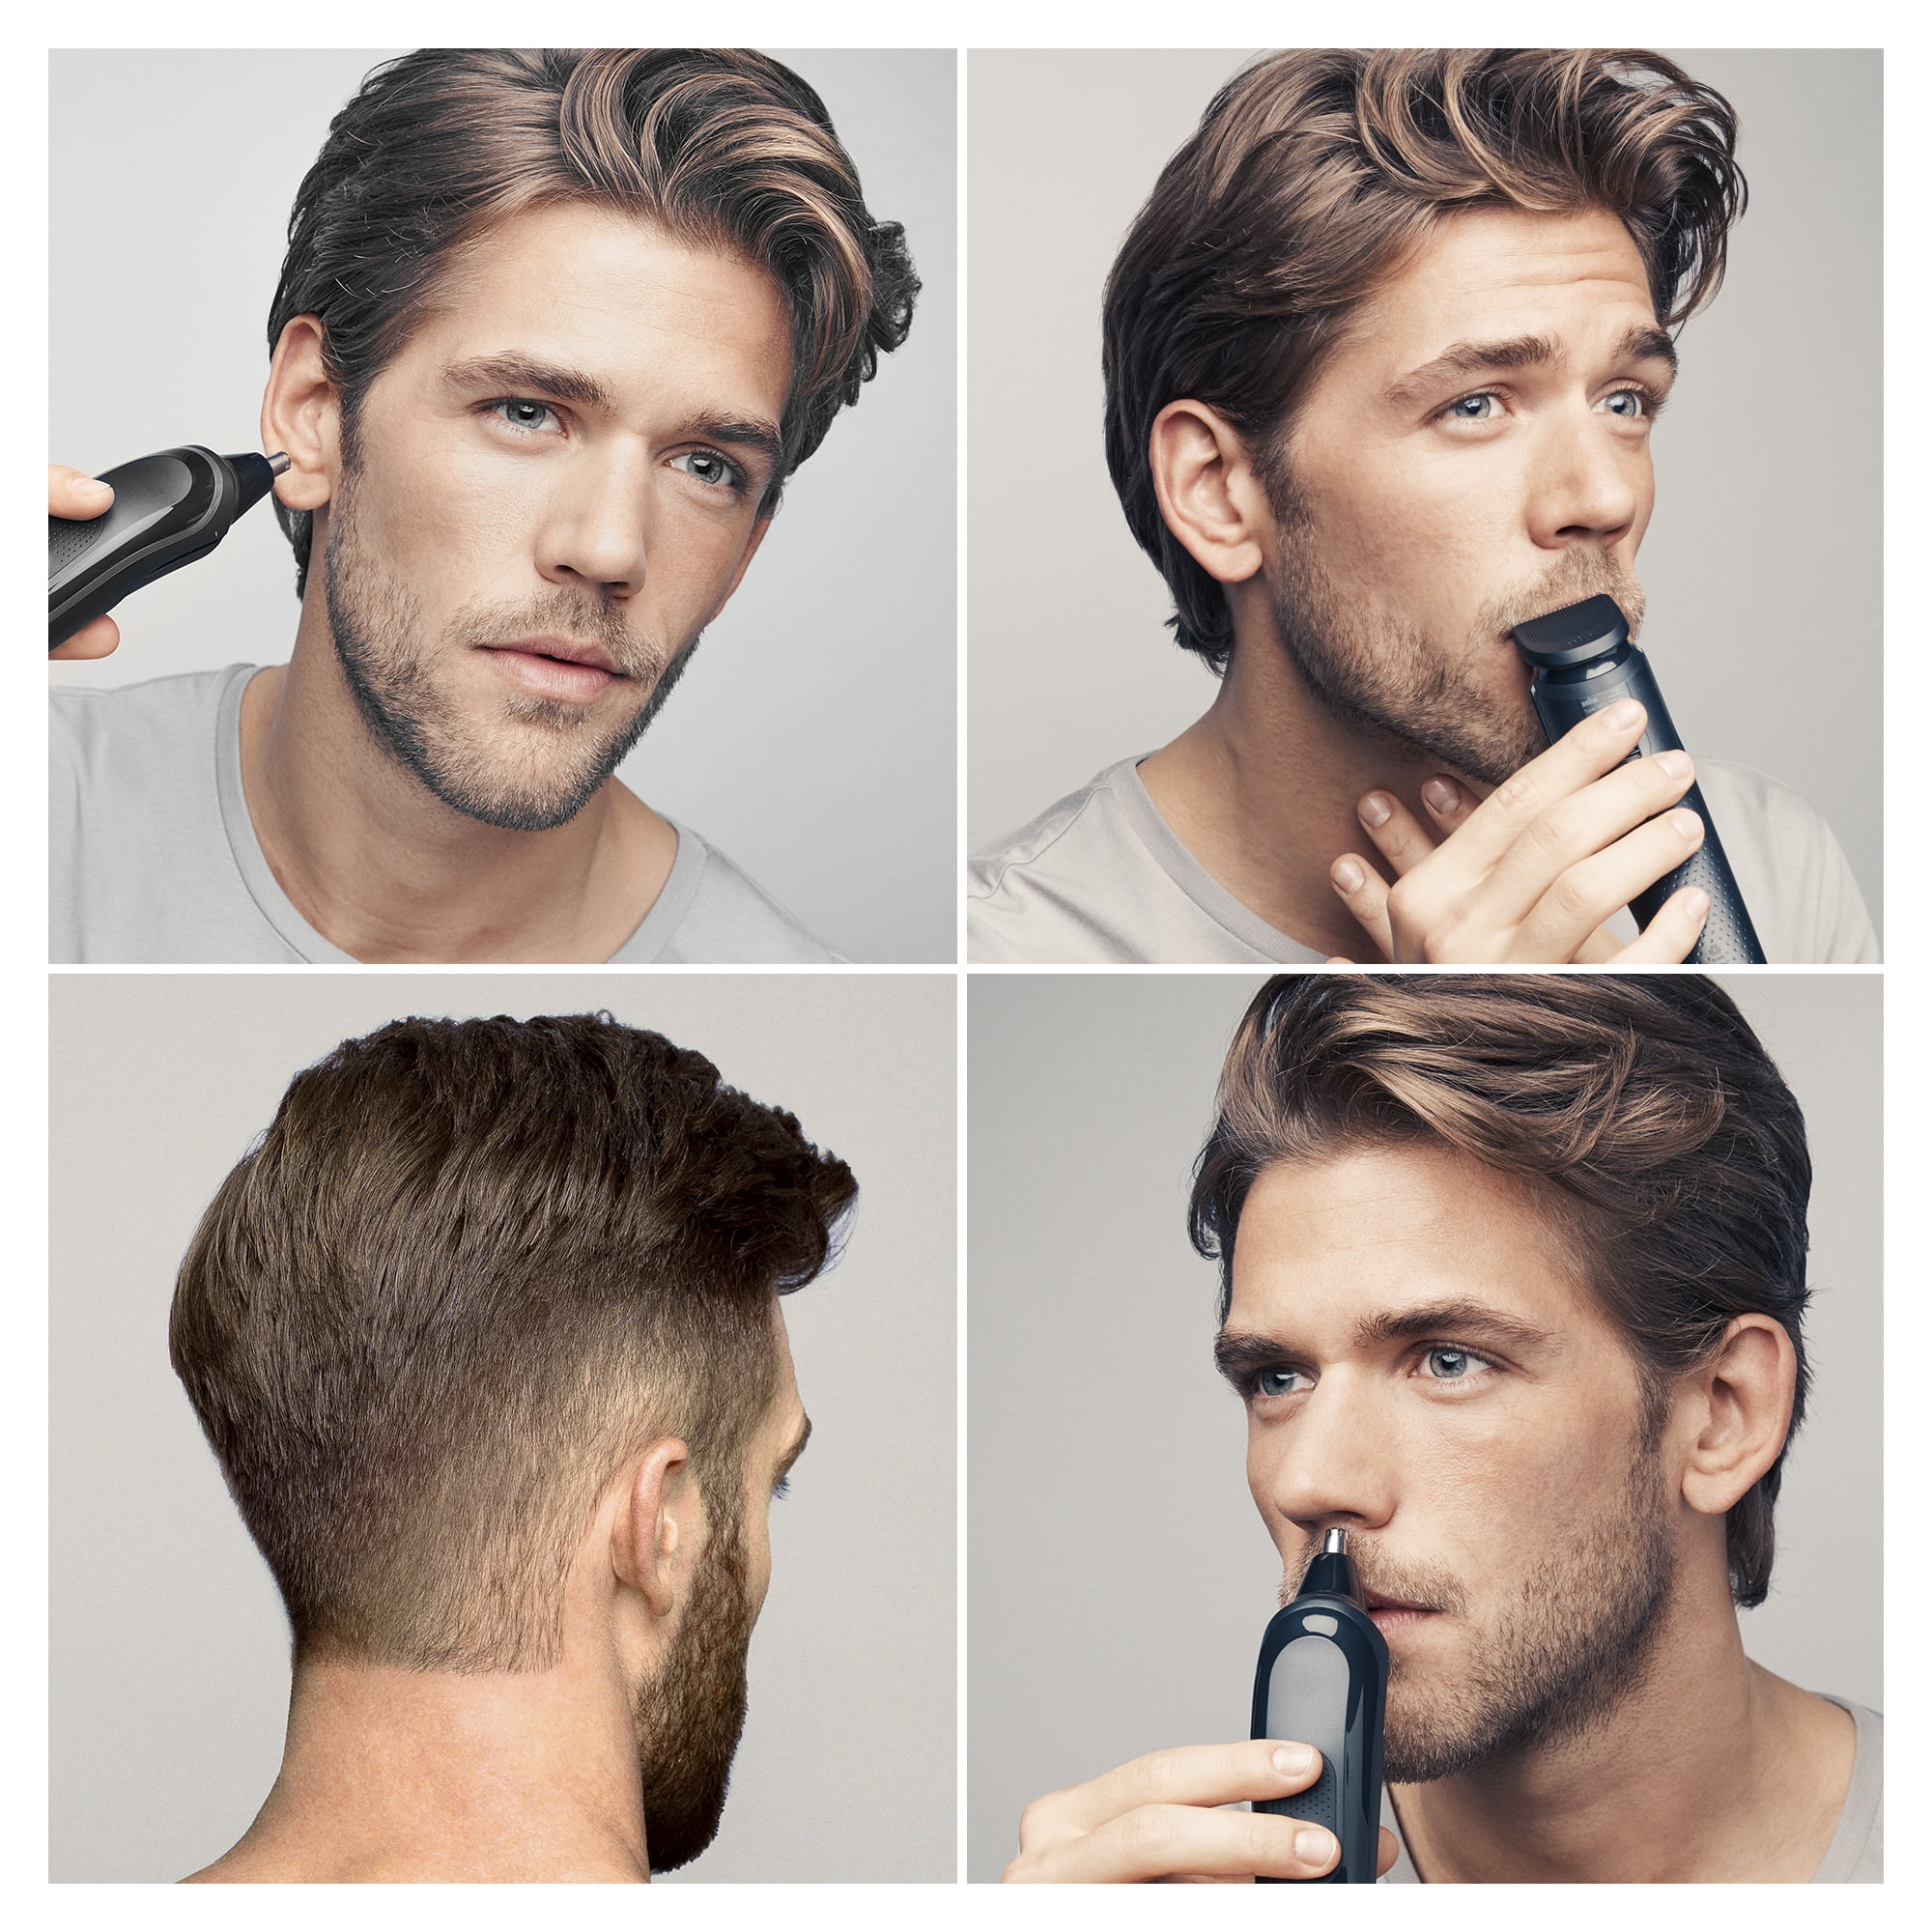 braun 6 in 1 beard trimmer and hair clipper kit